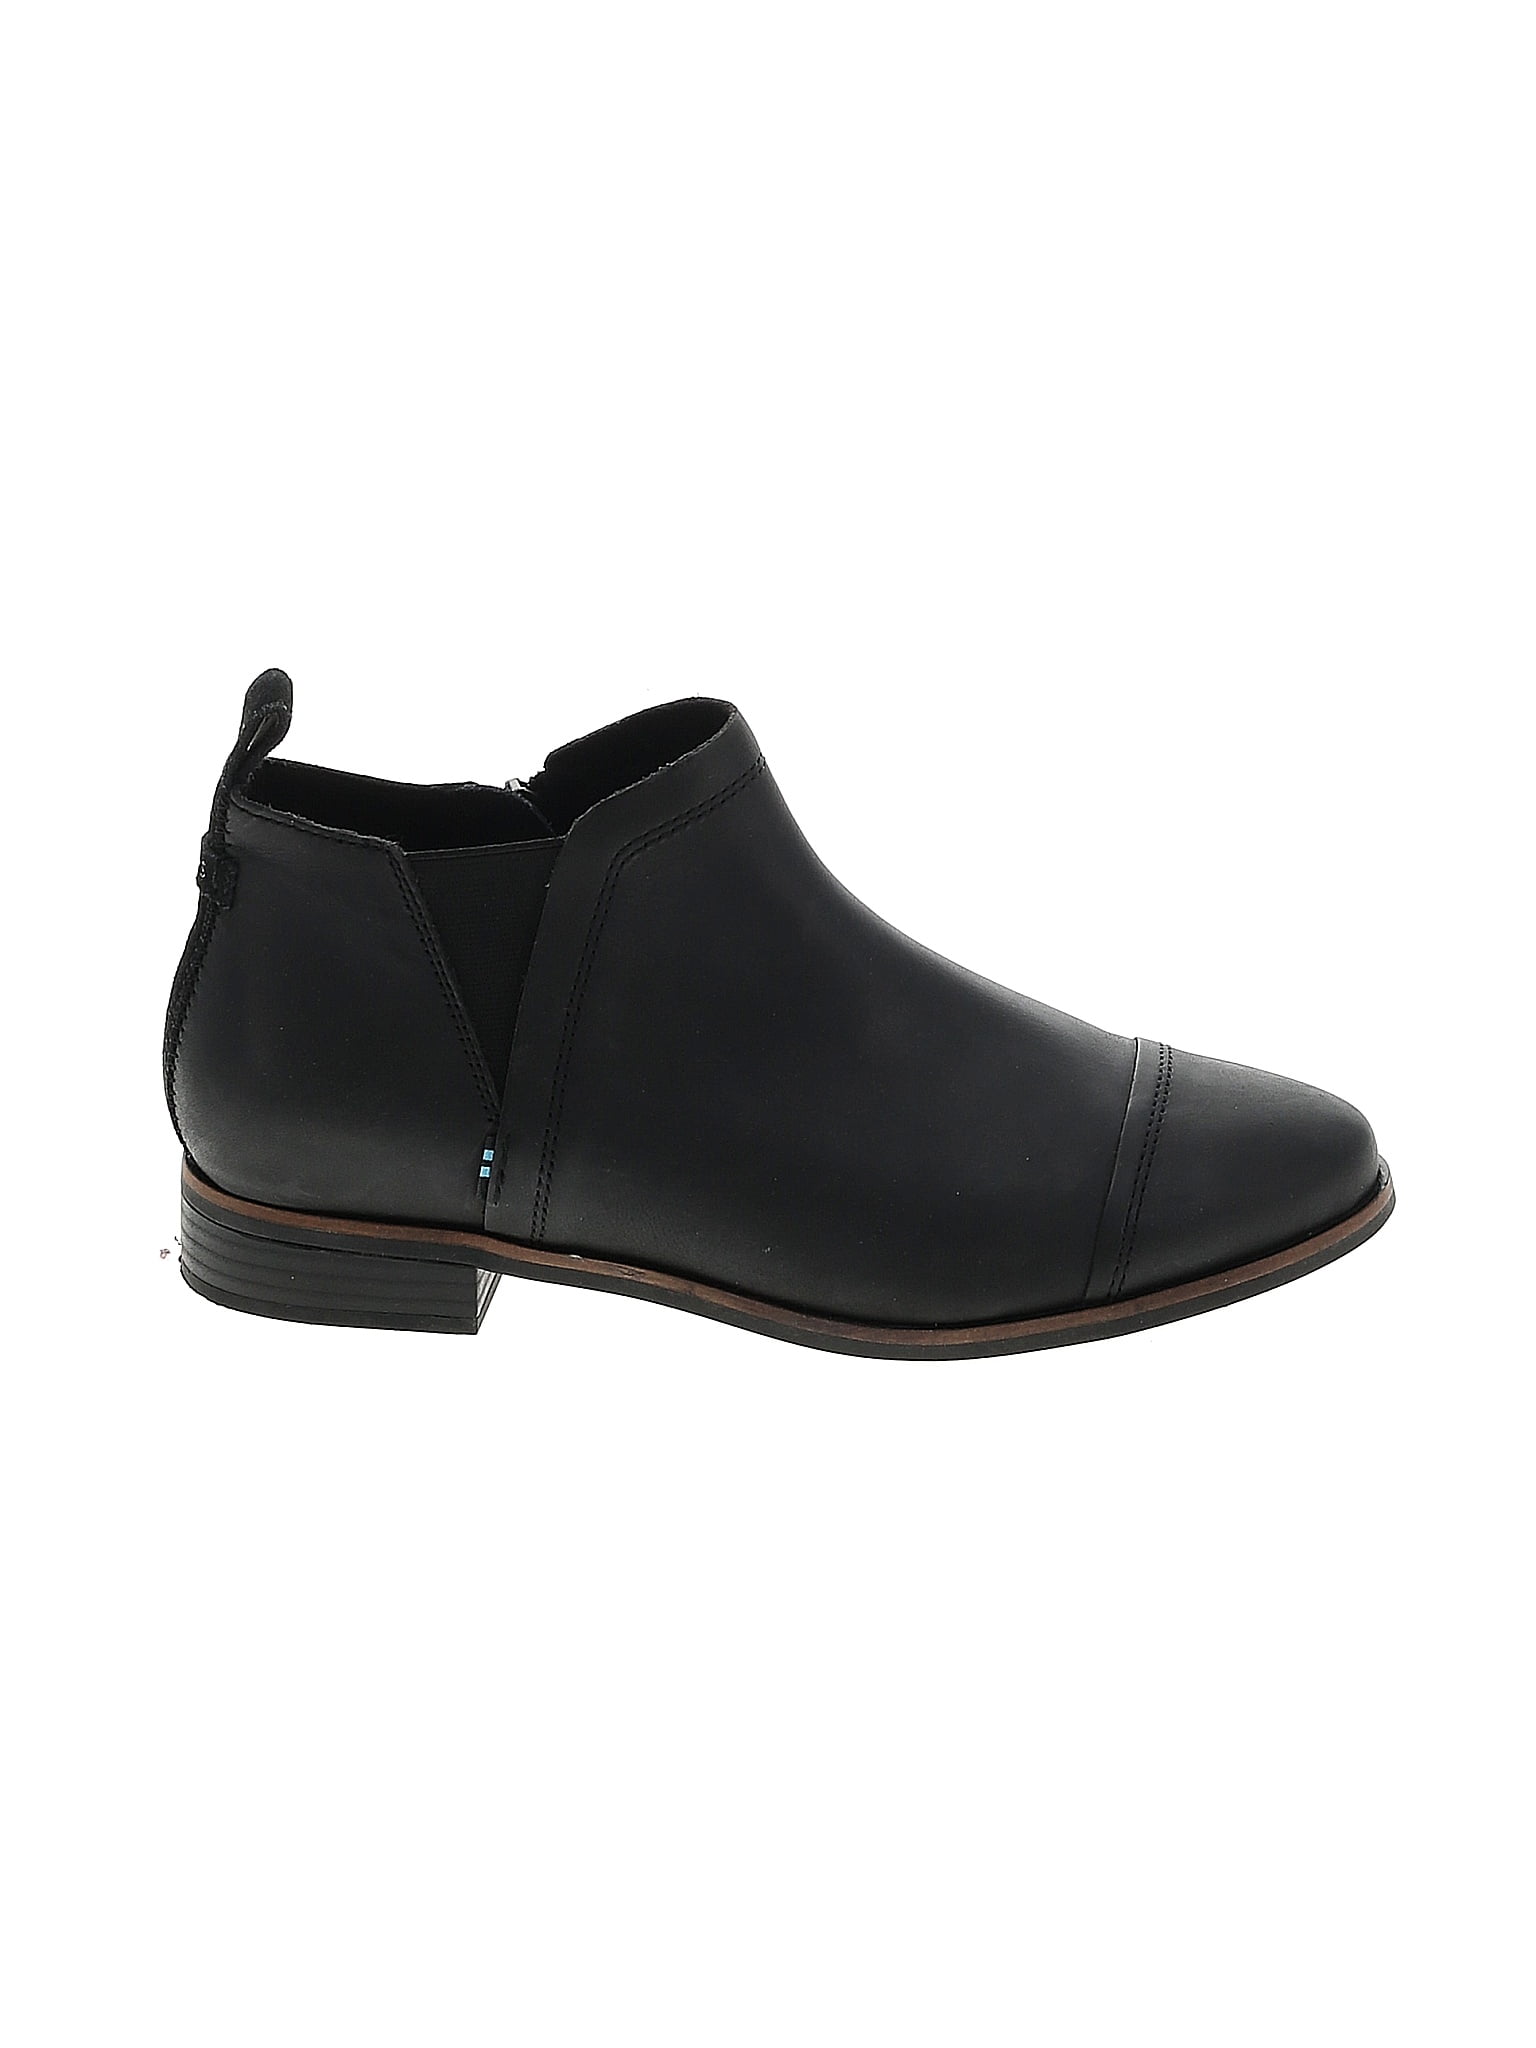 TOMS Solid Black Ankle Boots Size 8 - 53% off | thredUP